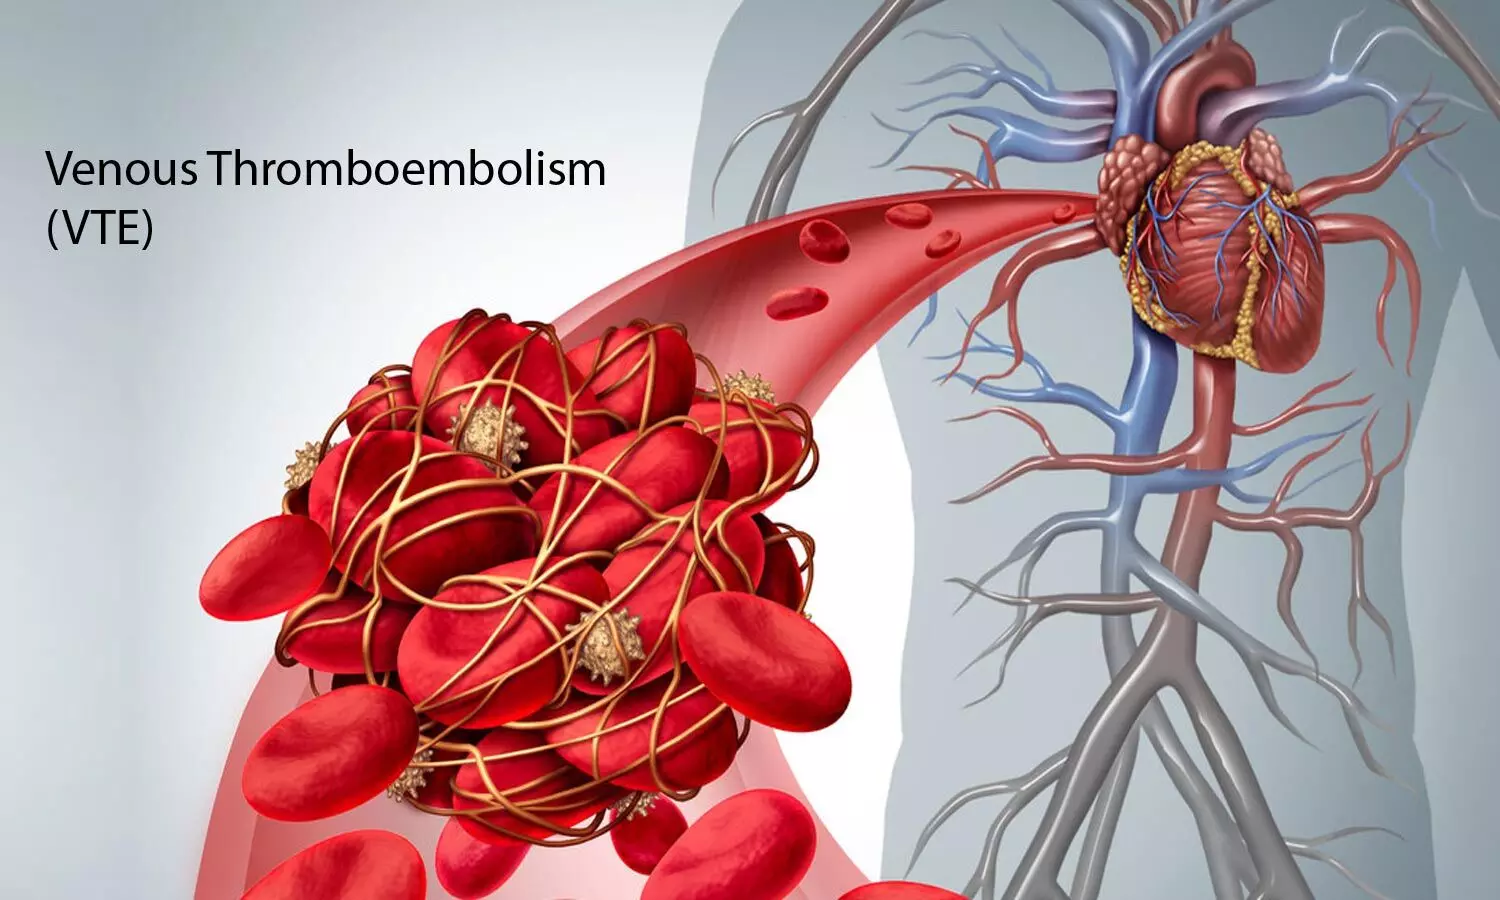 Management of venous thromboembolism, DVT and pulmonary embolism: ASH guidelines